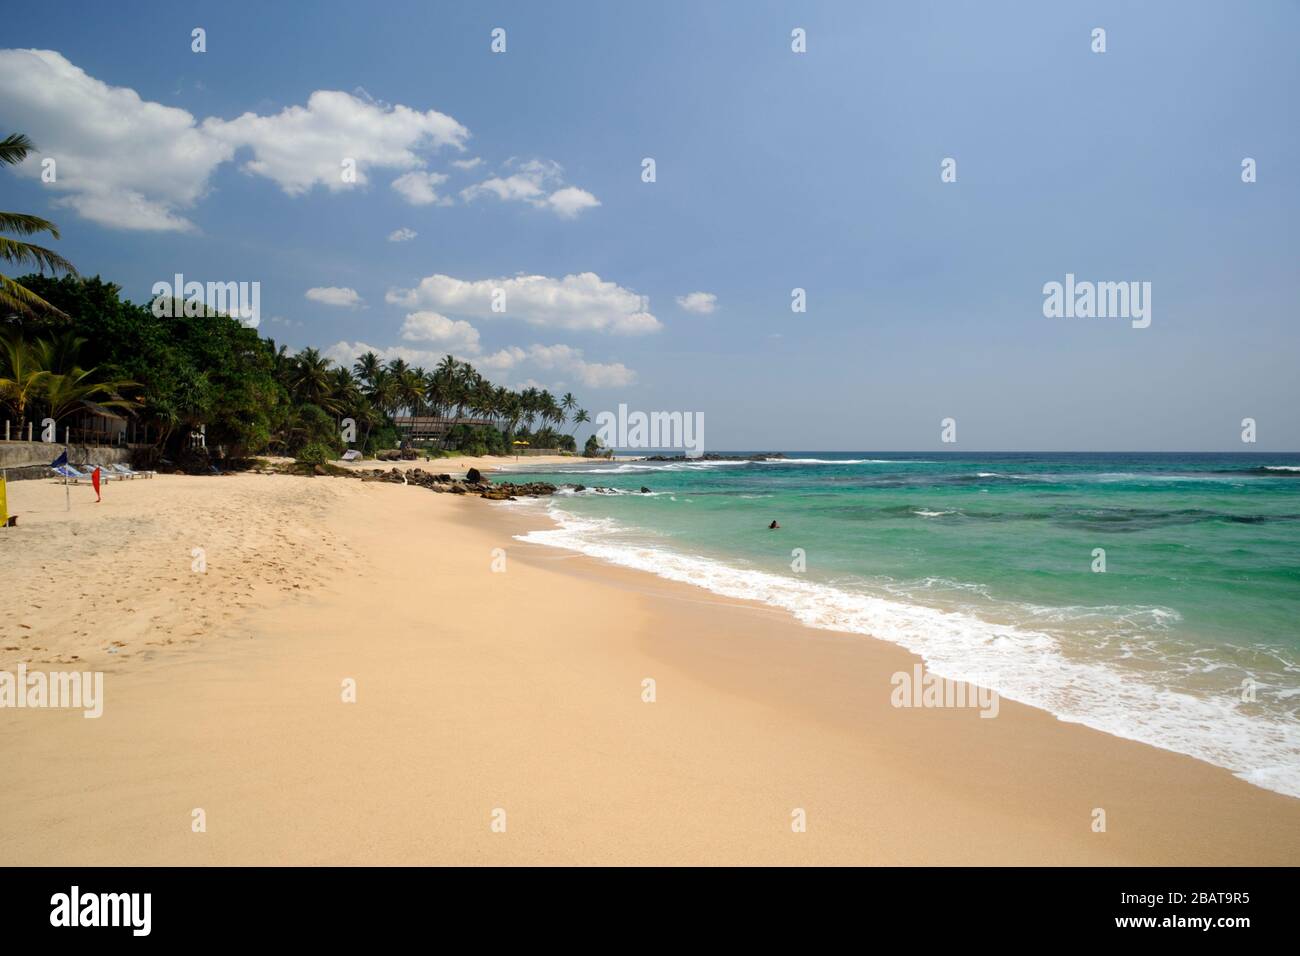 Sri Lanka, Galle, Unawatuna, Thalpe, playa Mihiripenna Foto de stock